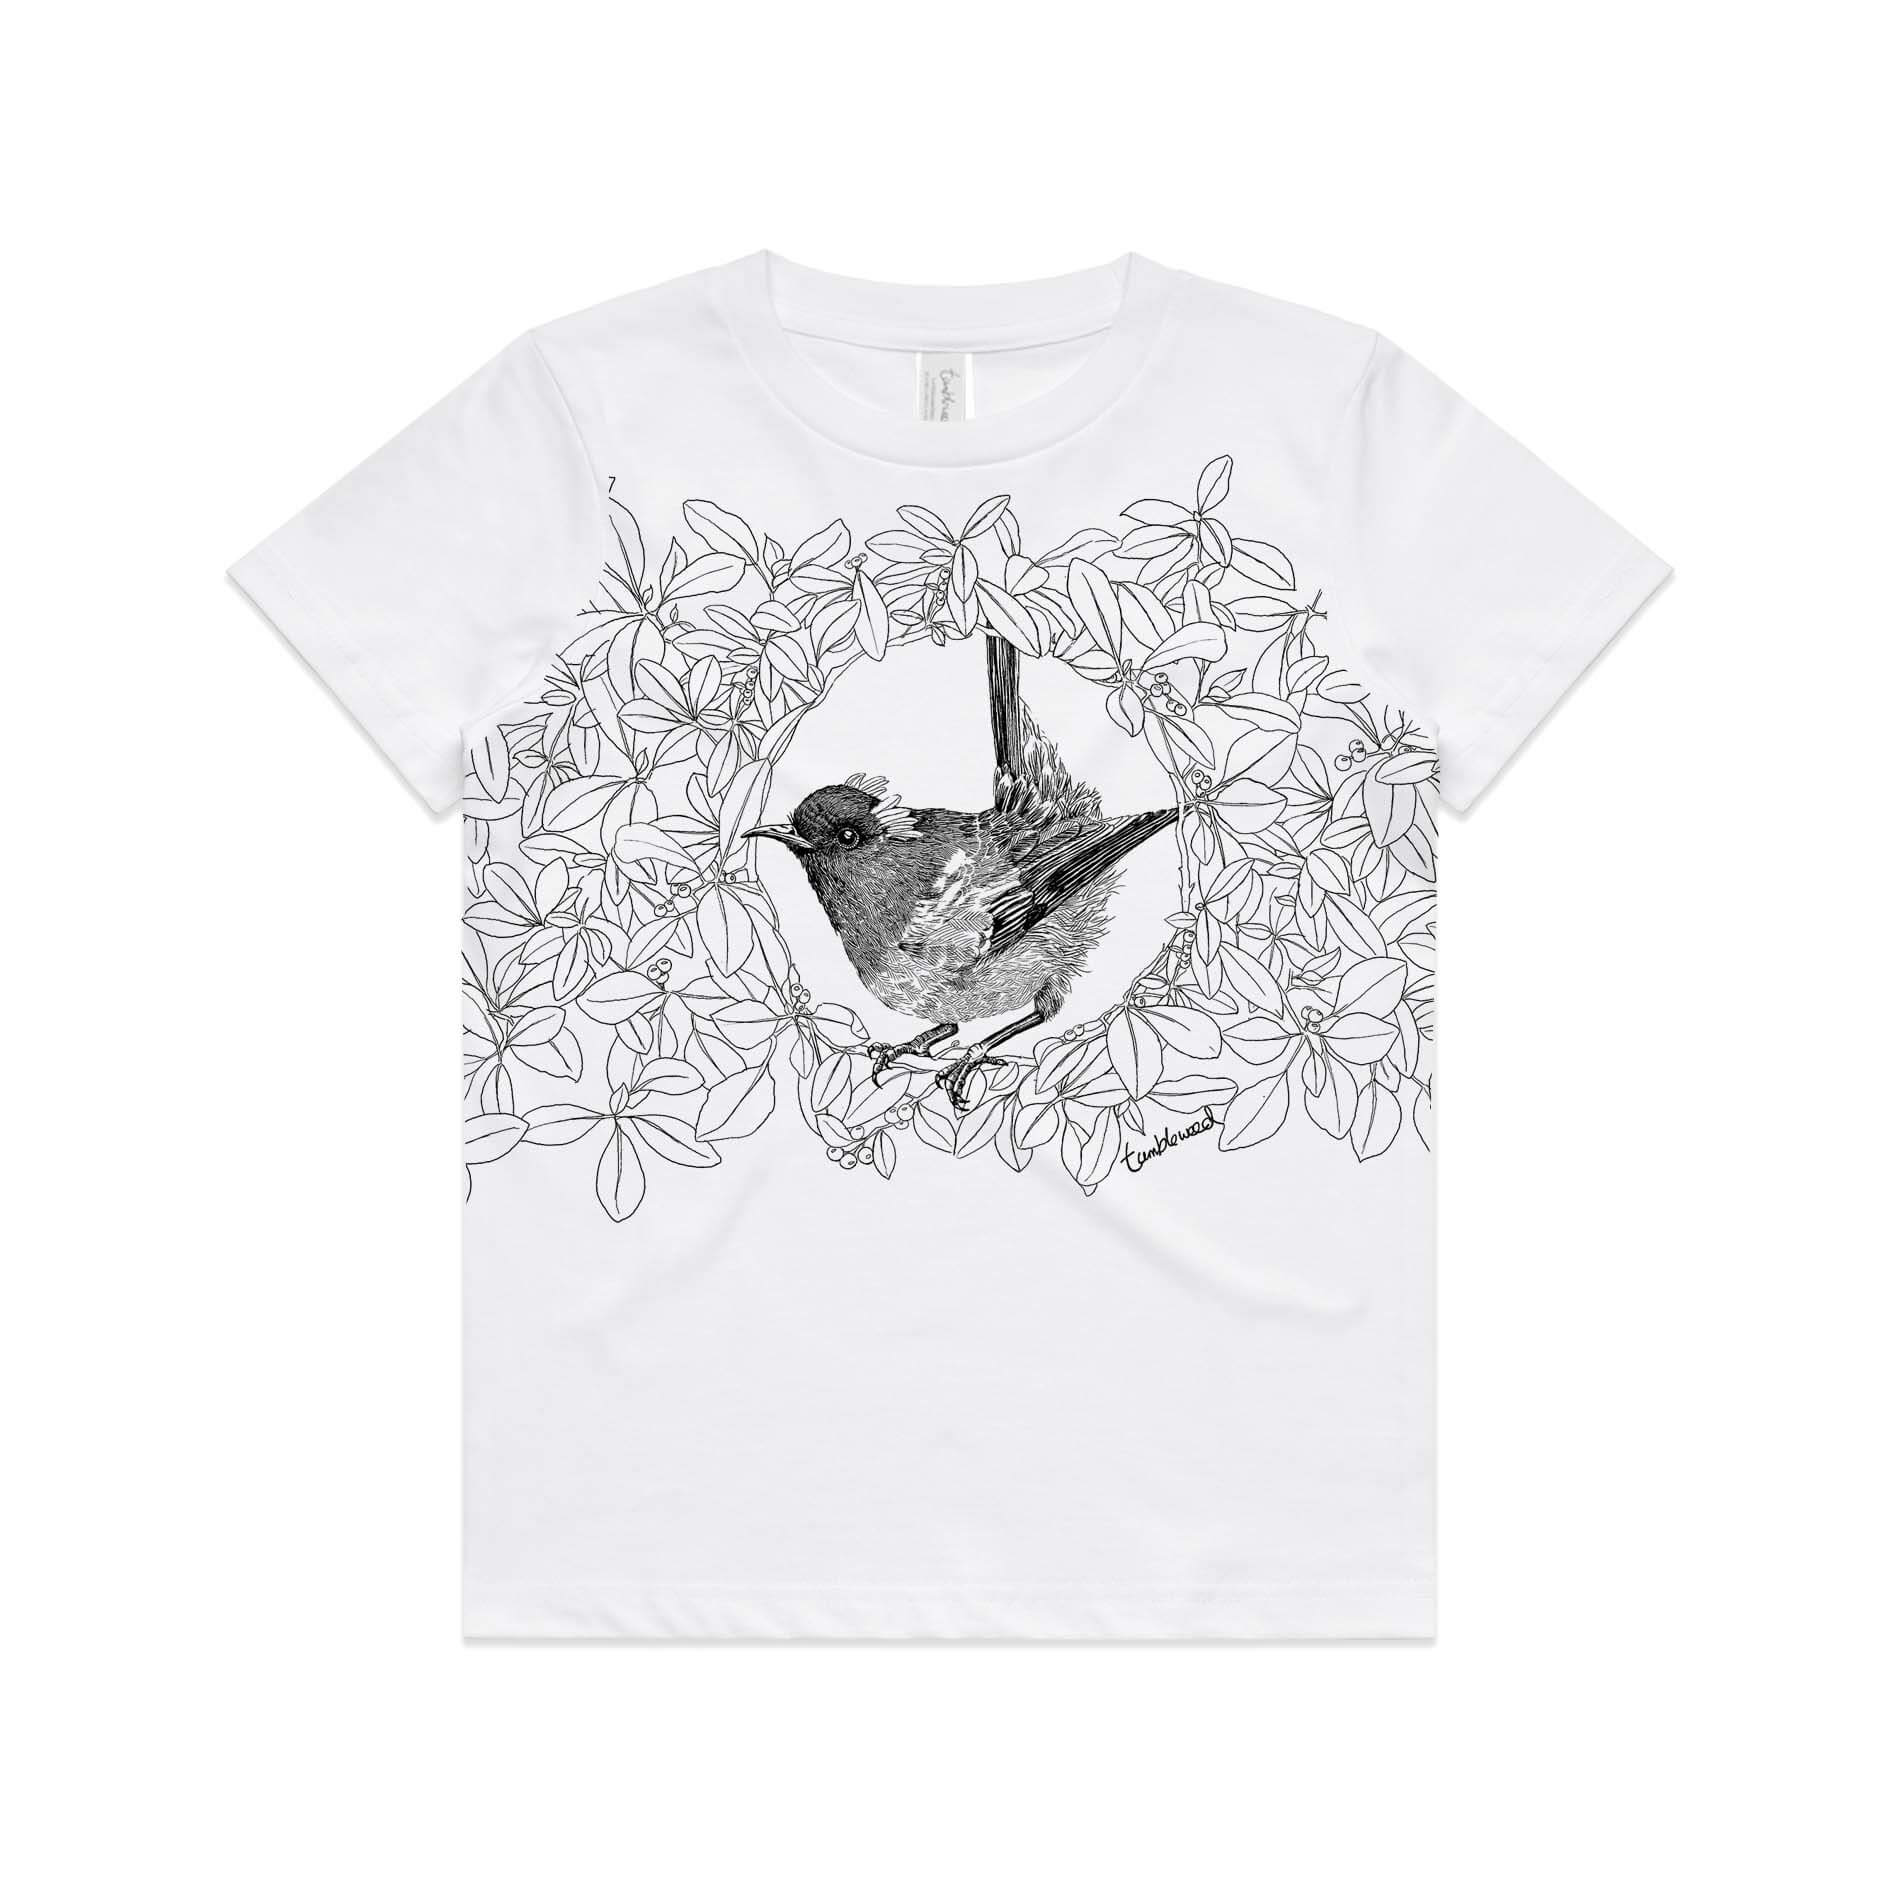 White, cotton kids' t-shirt with screen printed Kids hihi/stitchbird design.